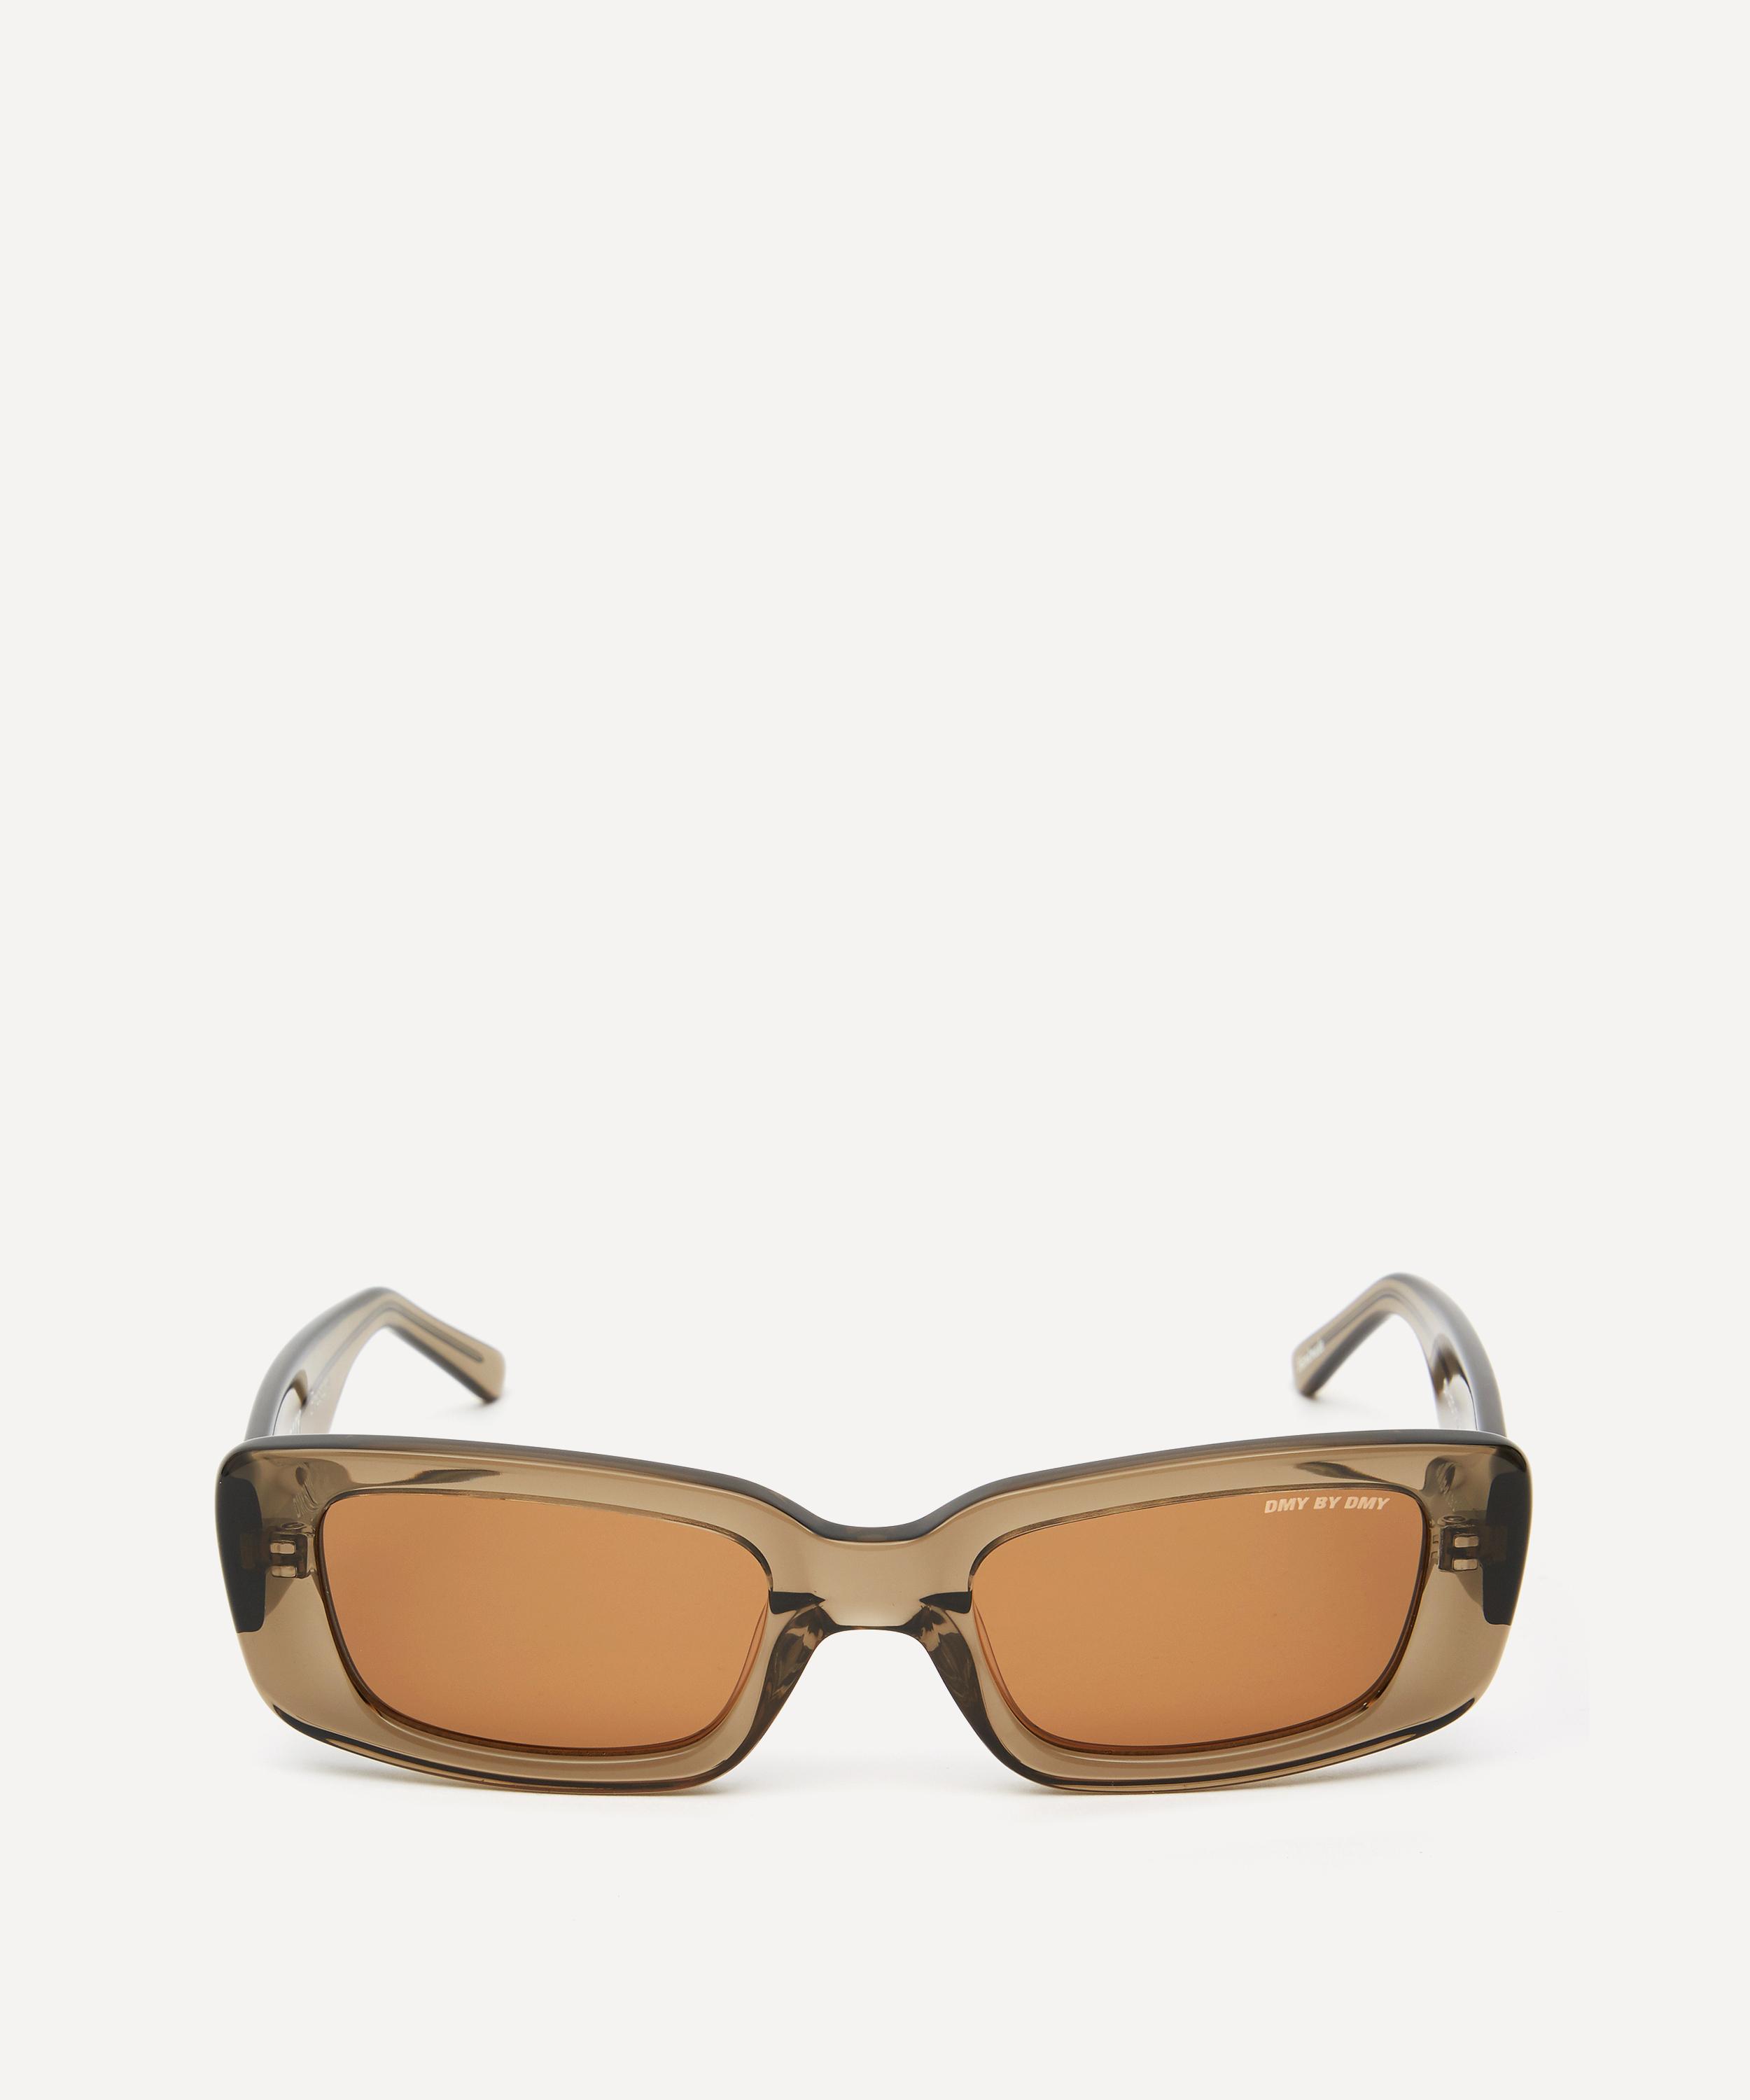 DMY BY DMY Preston Rectangular Sunglasses | Liberty